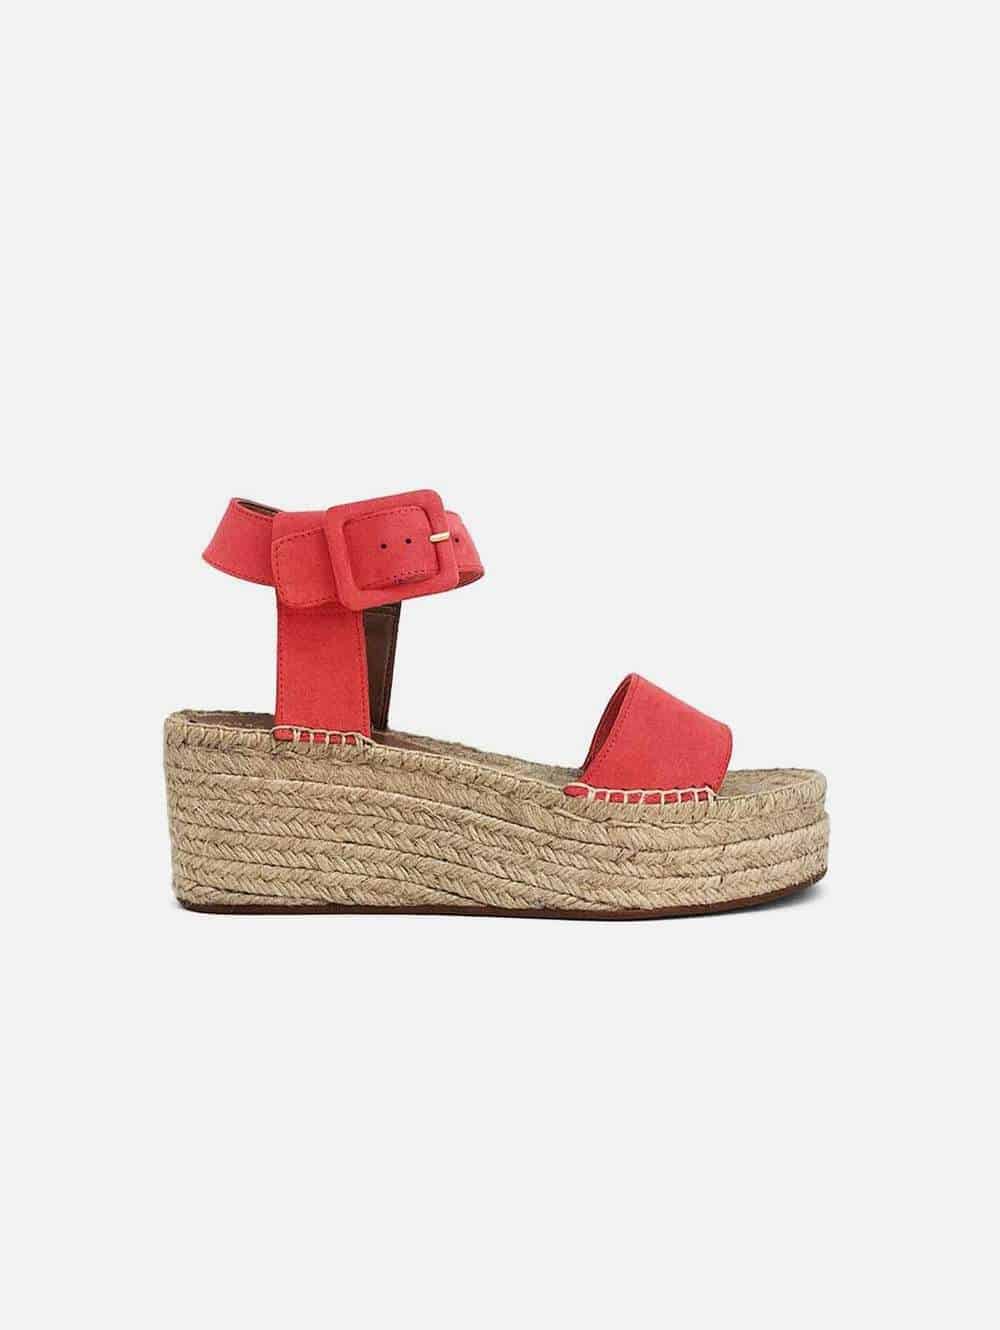 Coral platform sandals with jute sole